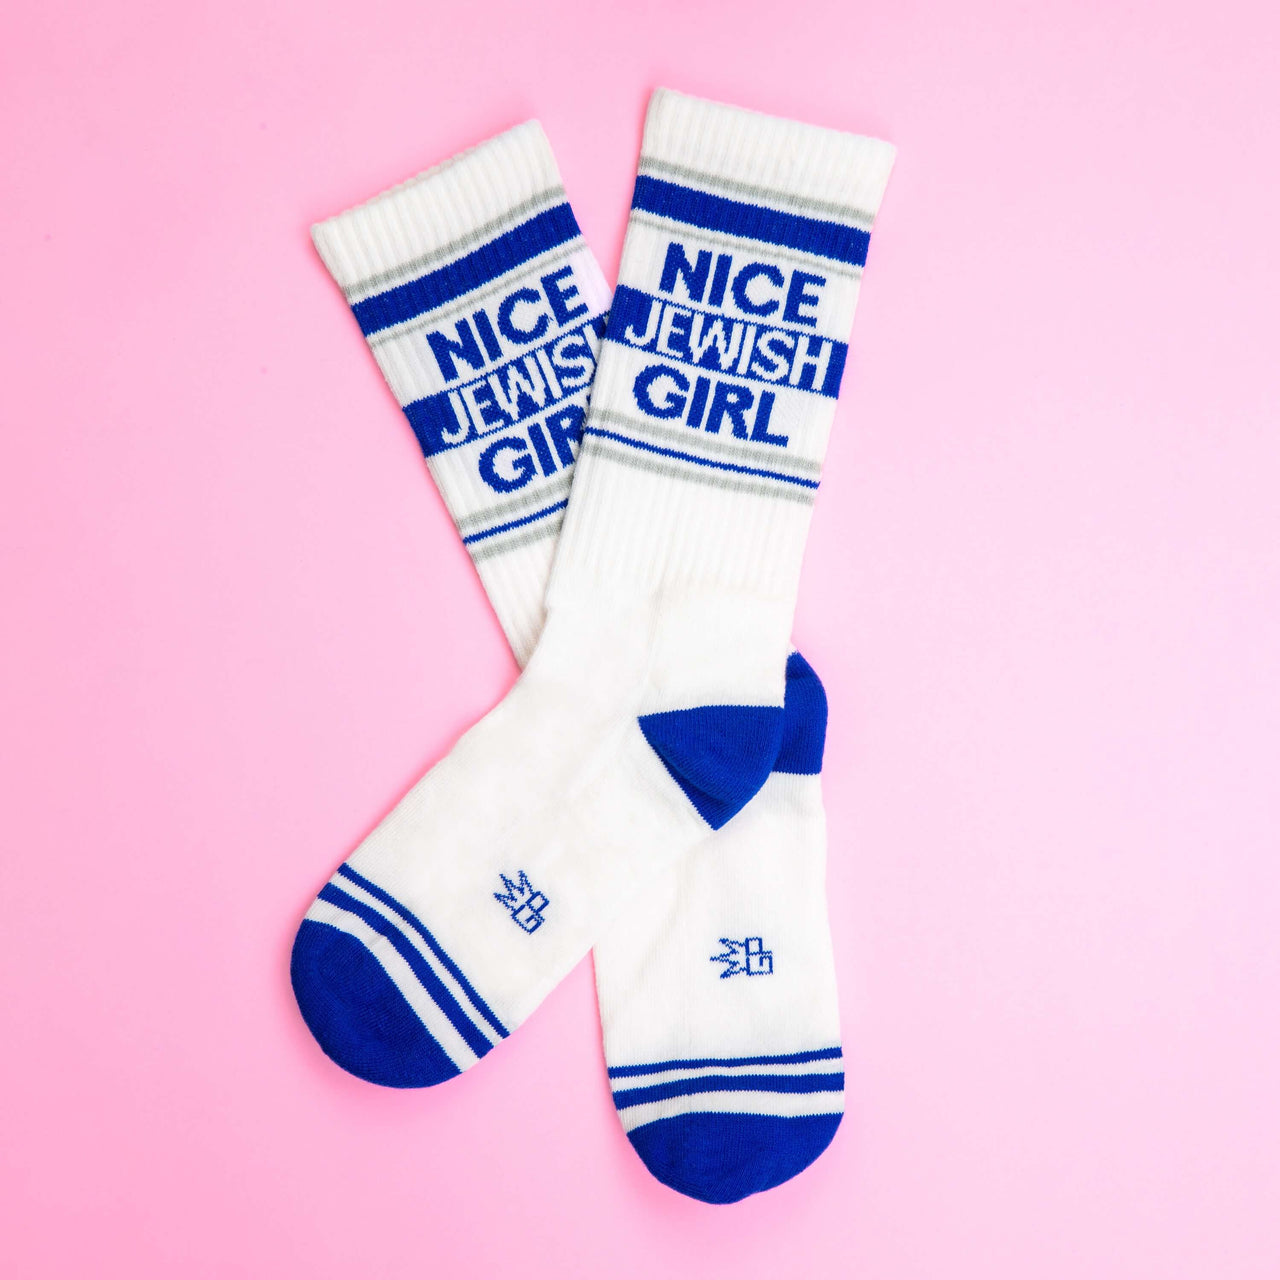 Gumball Poodle Socks Blue / One Size Nice Jewish Girl Socks